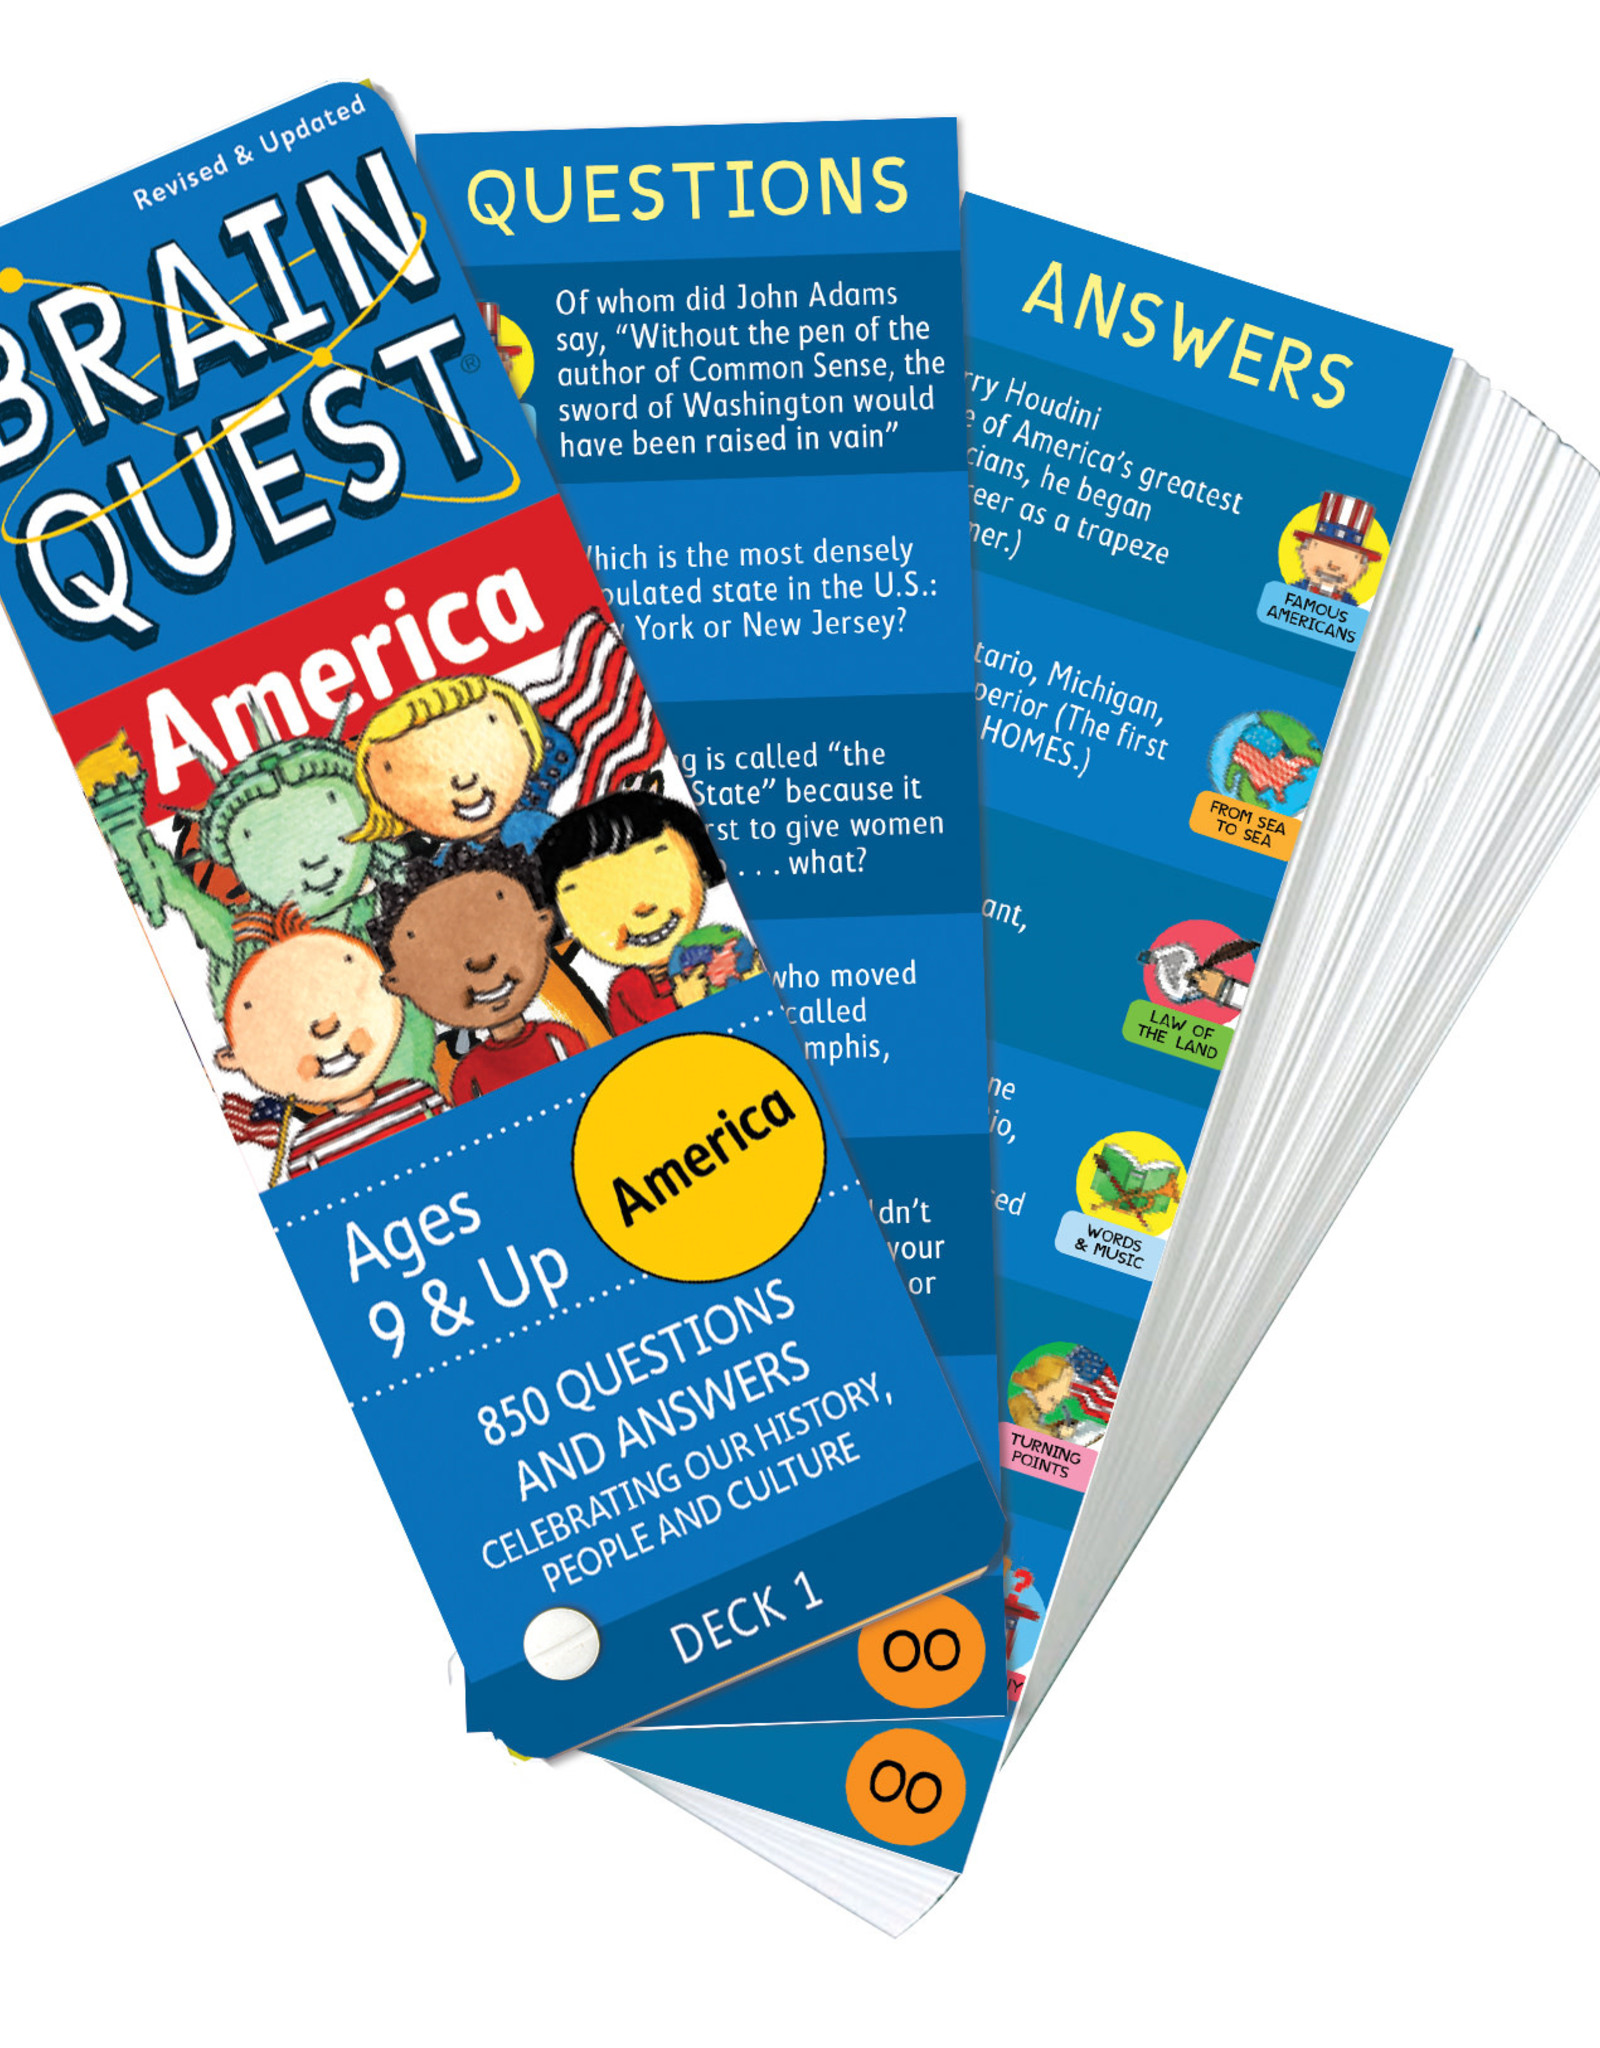 Brain quest children's trivia game.